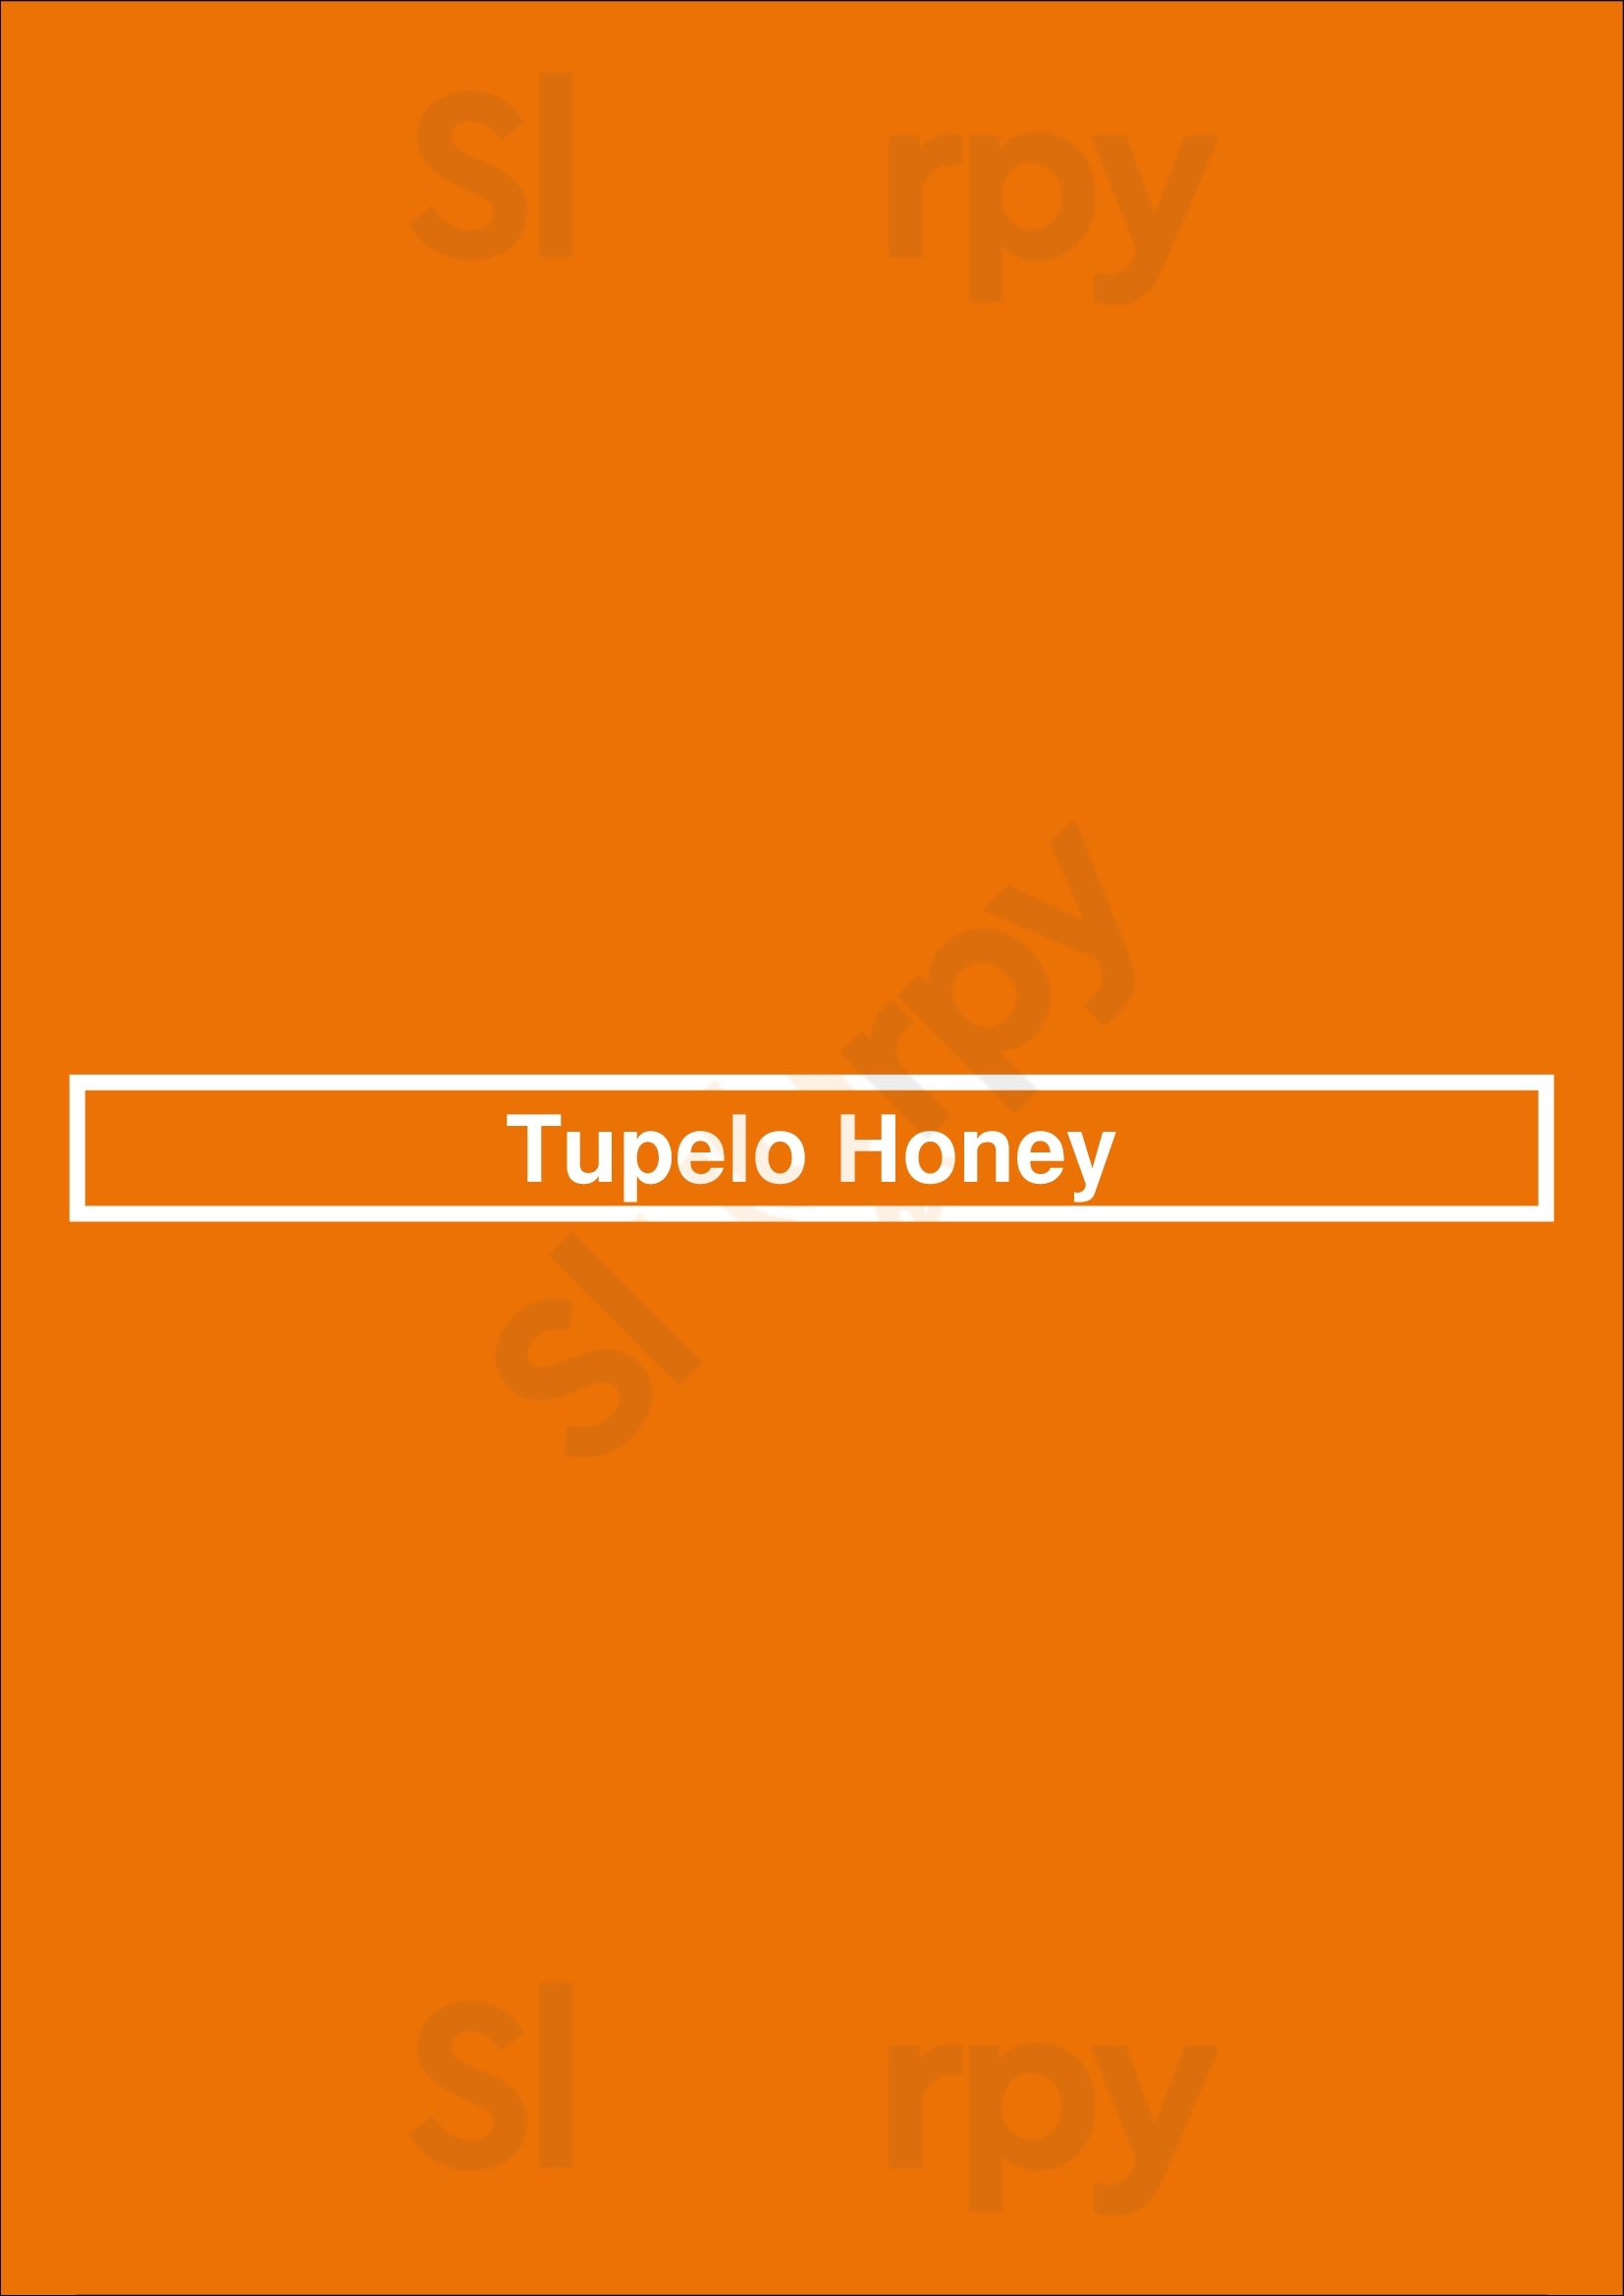 Tupelo Honey Southern Kitchen & Bar Virginia Beach Menu - 1